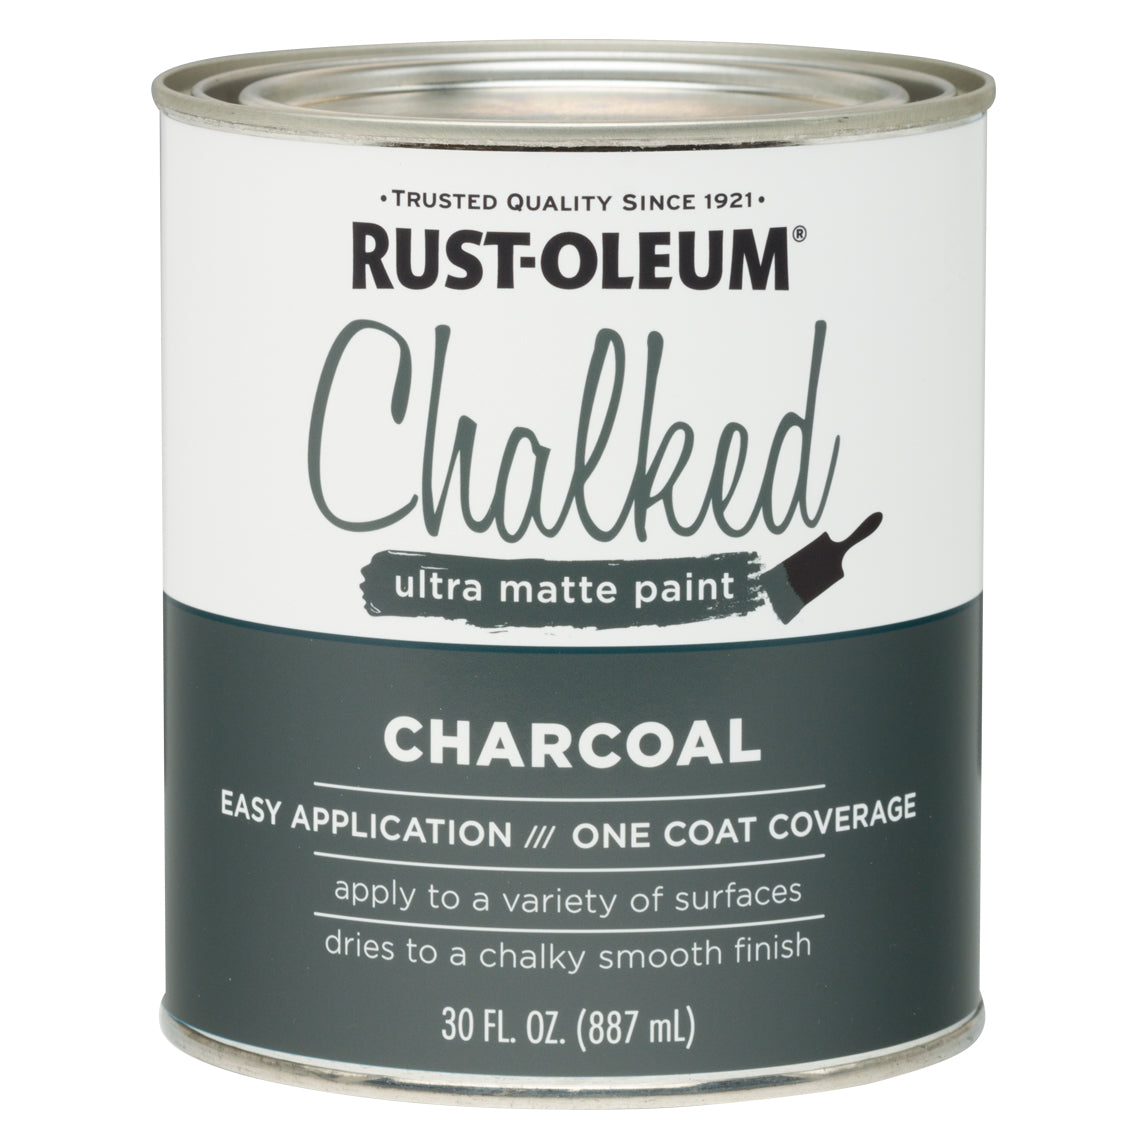 Grey Chalk Paint